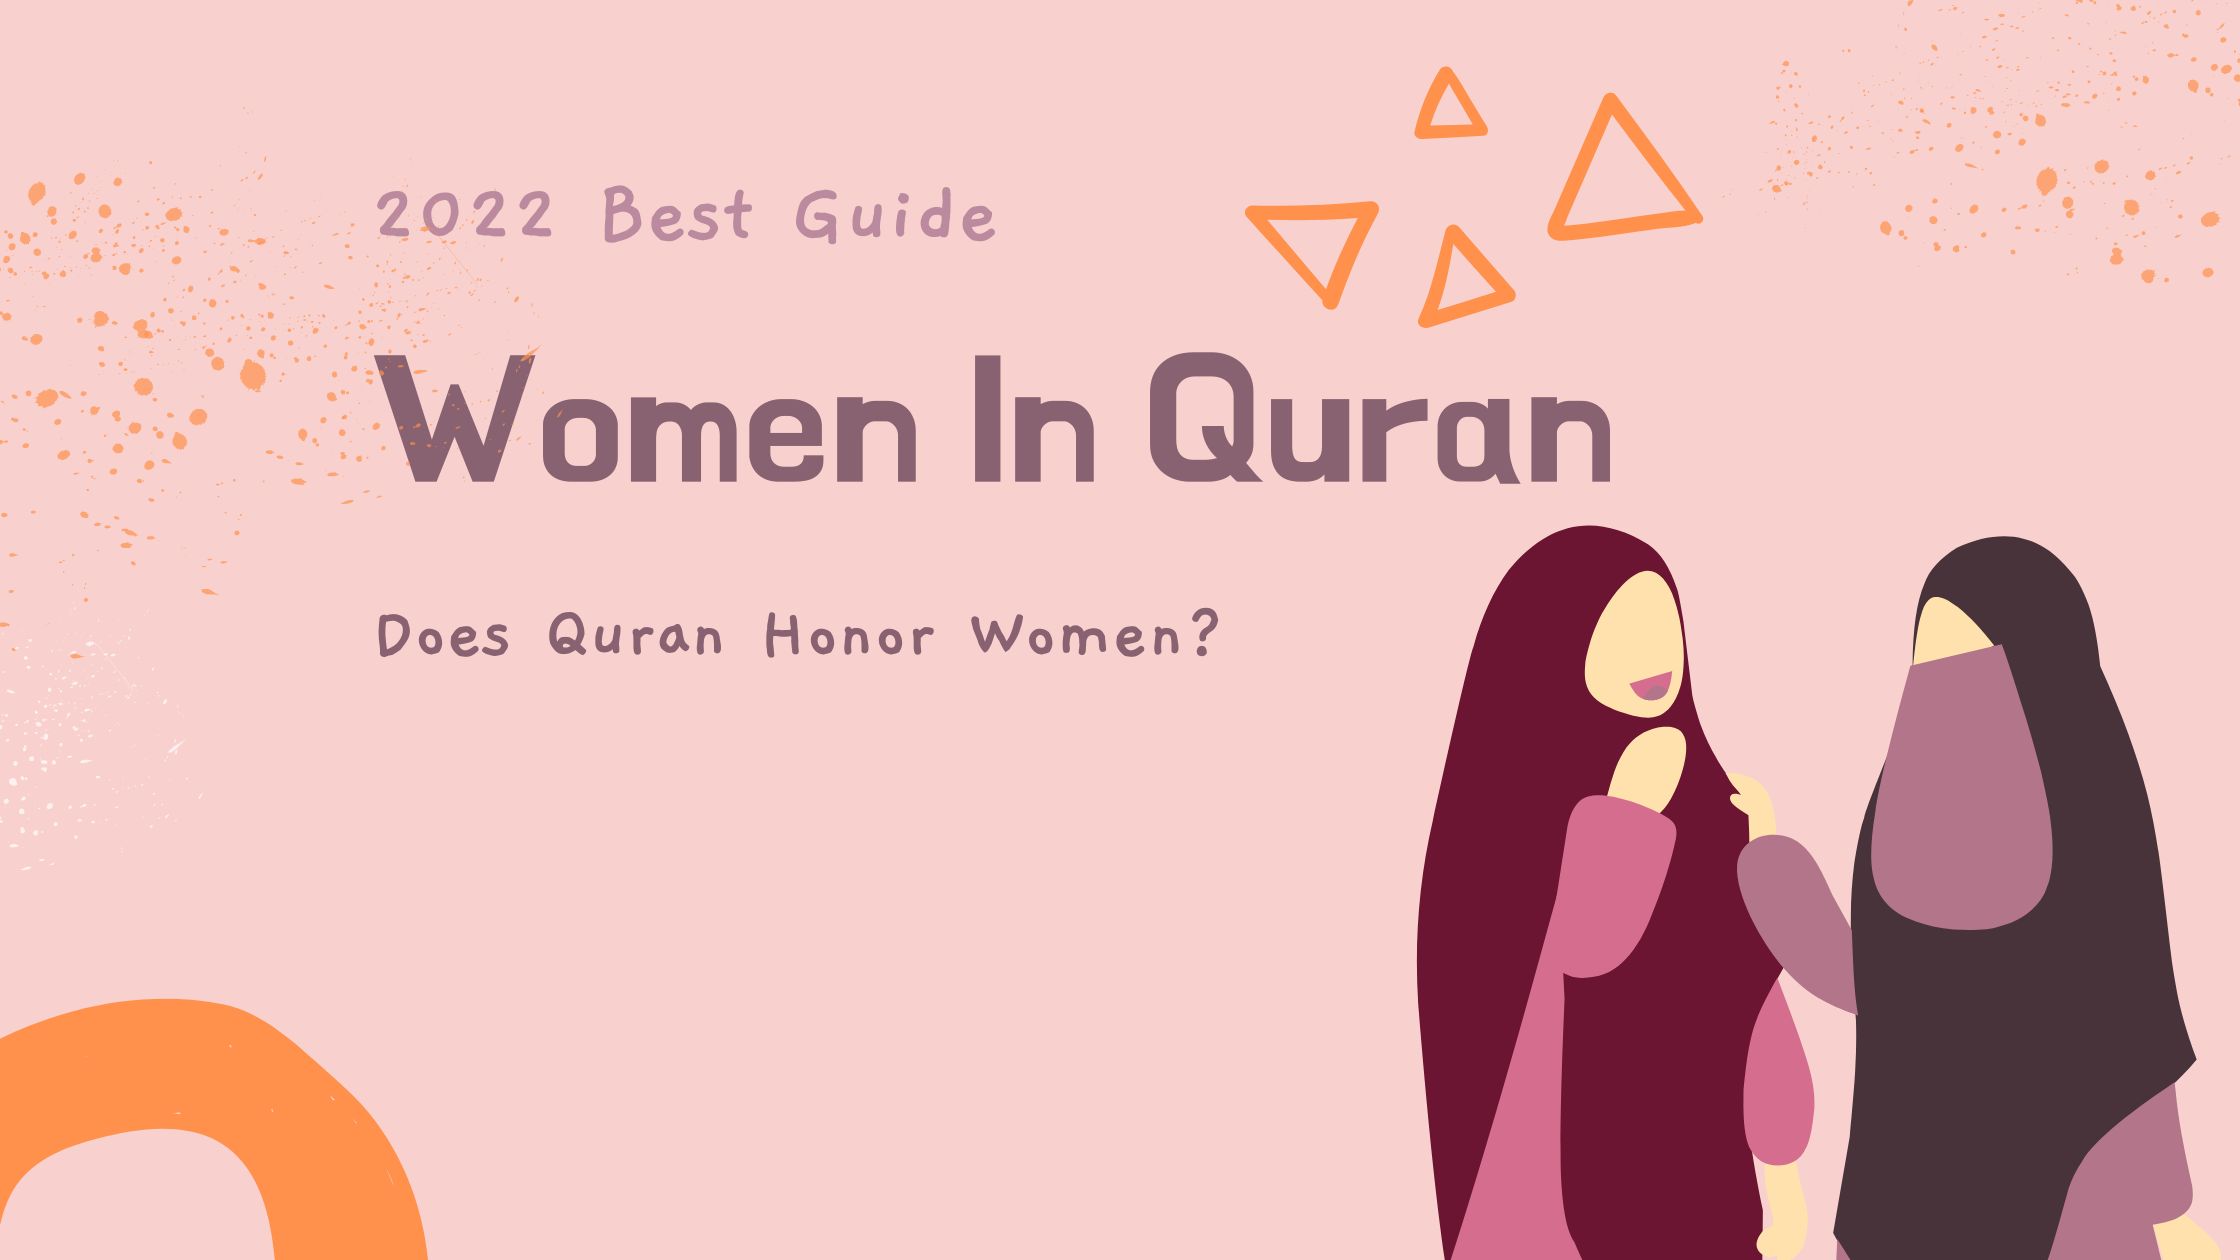 Women in Quran - Does Quran Honor Women